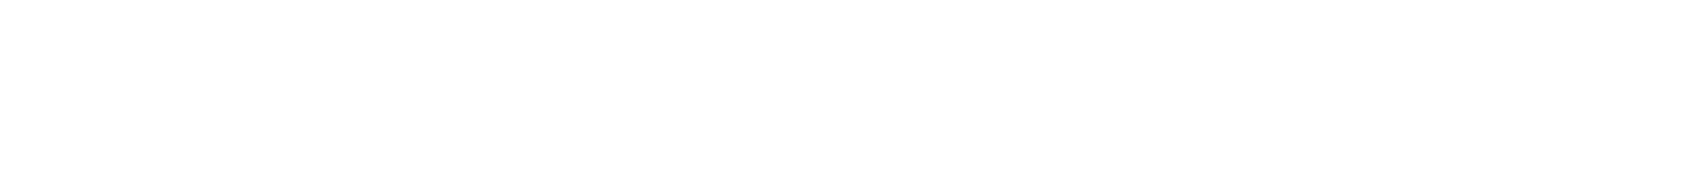 E mayornan di Edgard: Edgard Sr  y Fatima Kelkboom Gerelin & Edgard y Christa 